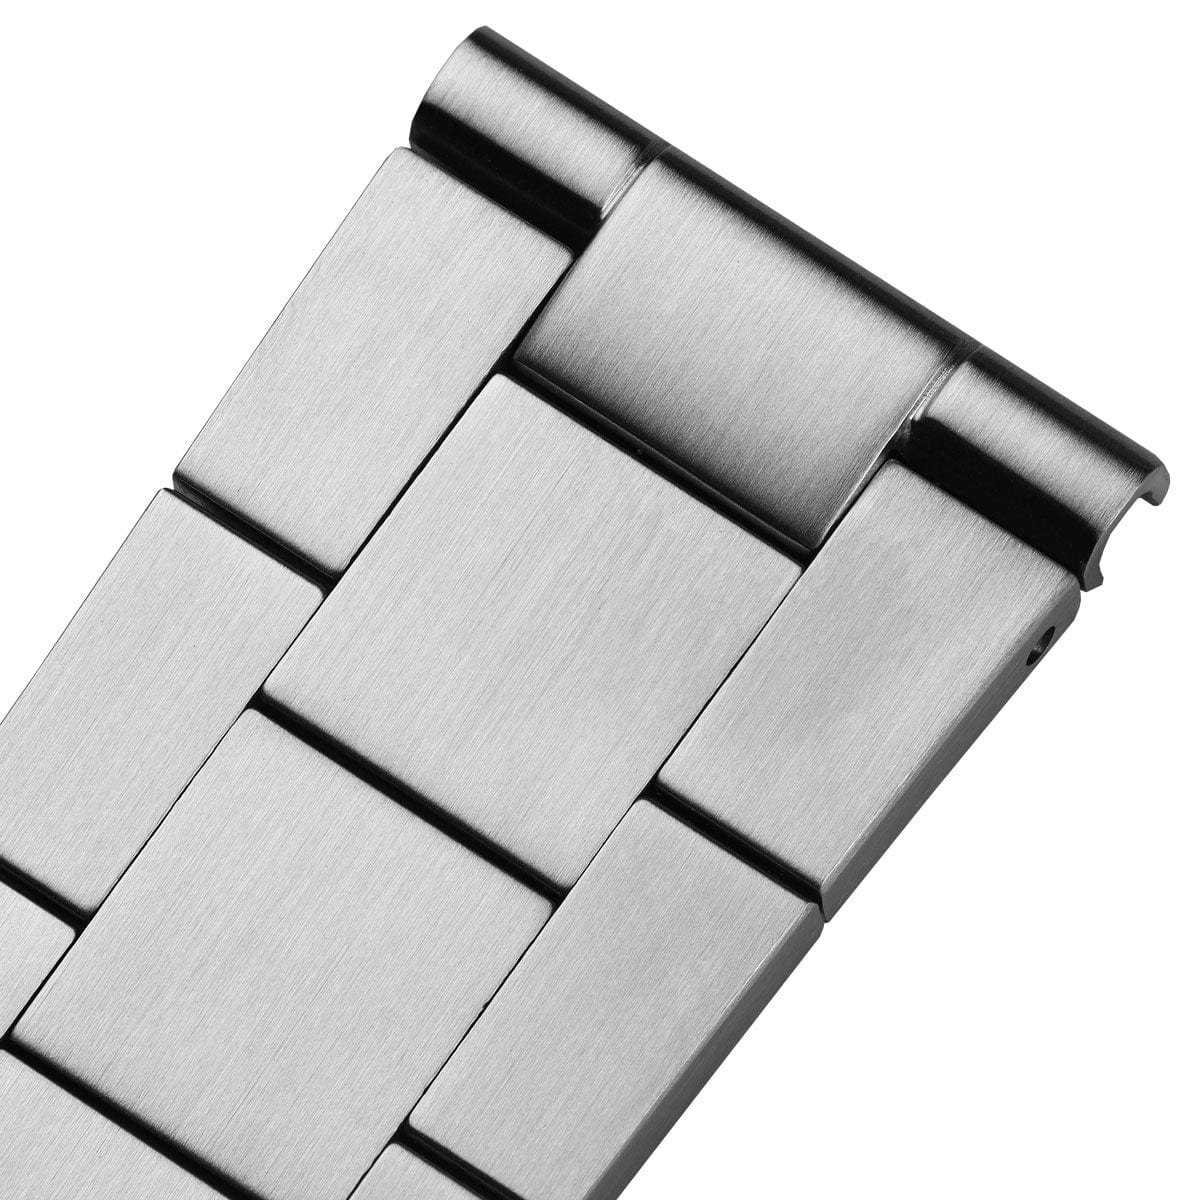 Flat Links Version Berwick Stainless Steel Watch Strap - Silver